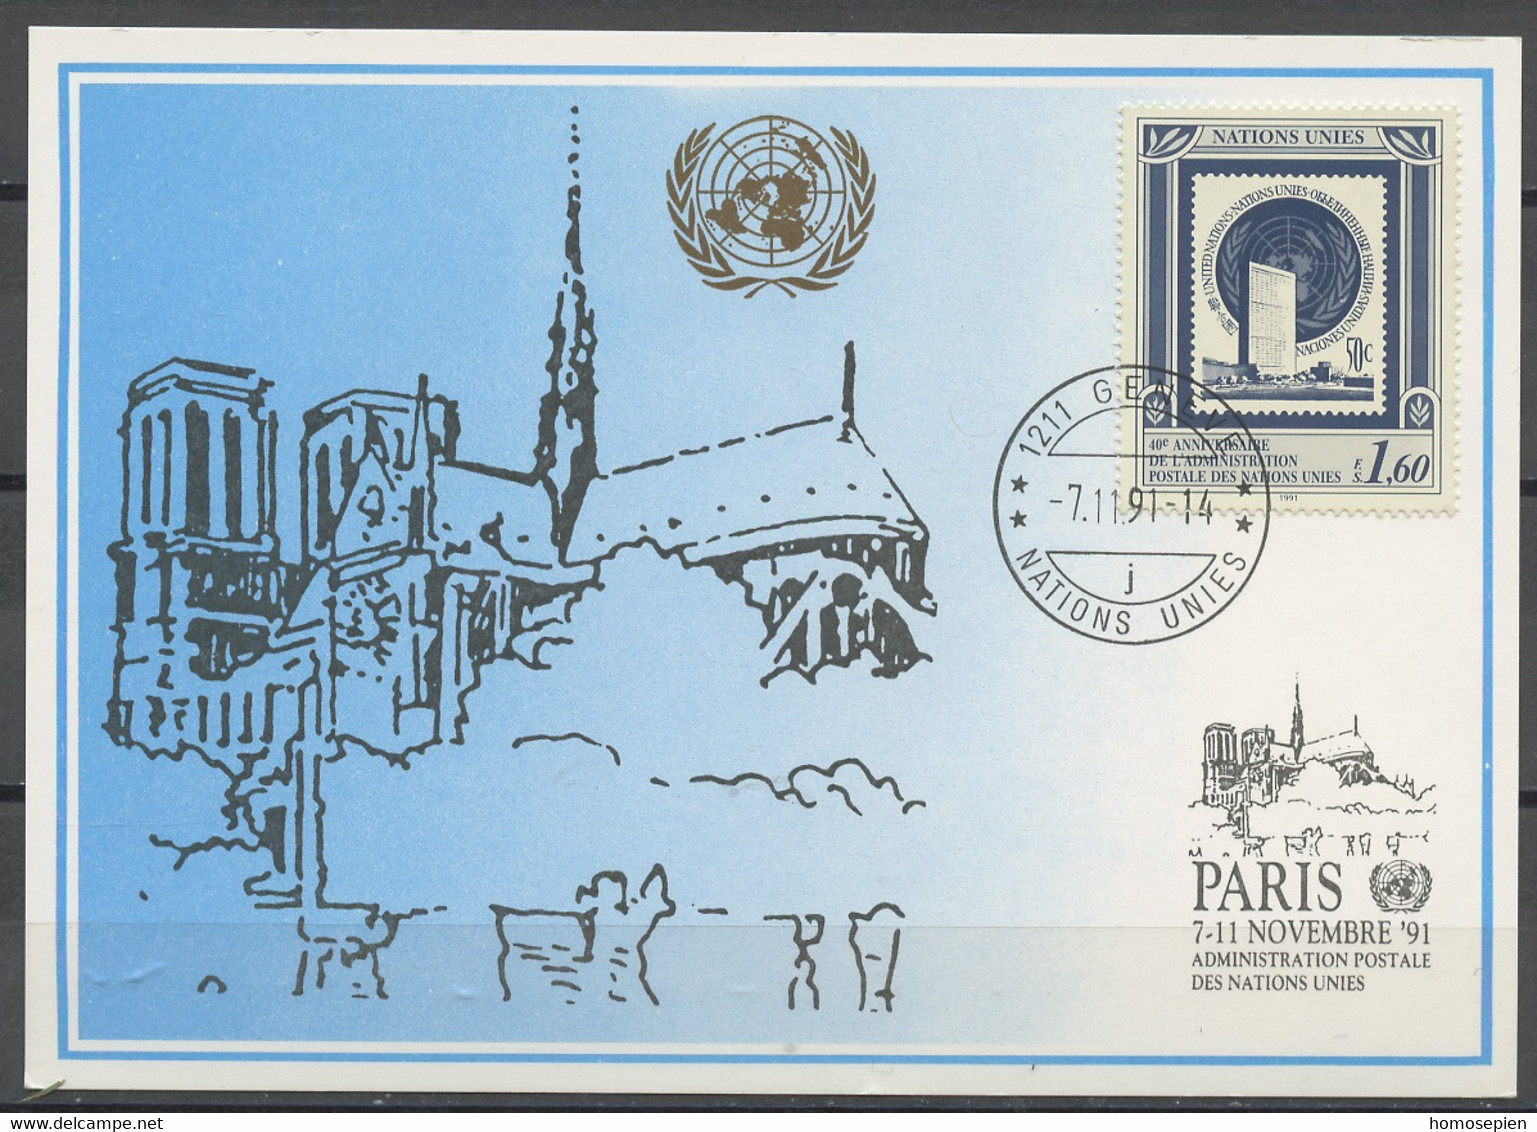 NU Genève - Vereinte Nationen CM 1991 Y&T N°215 - Michel N°215 - 1,60f Siège De L'ONU - Maximum Cards